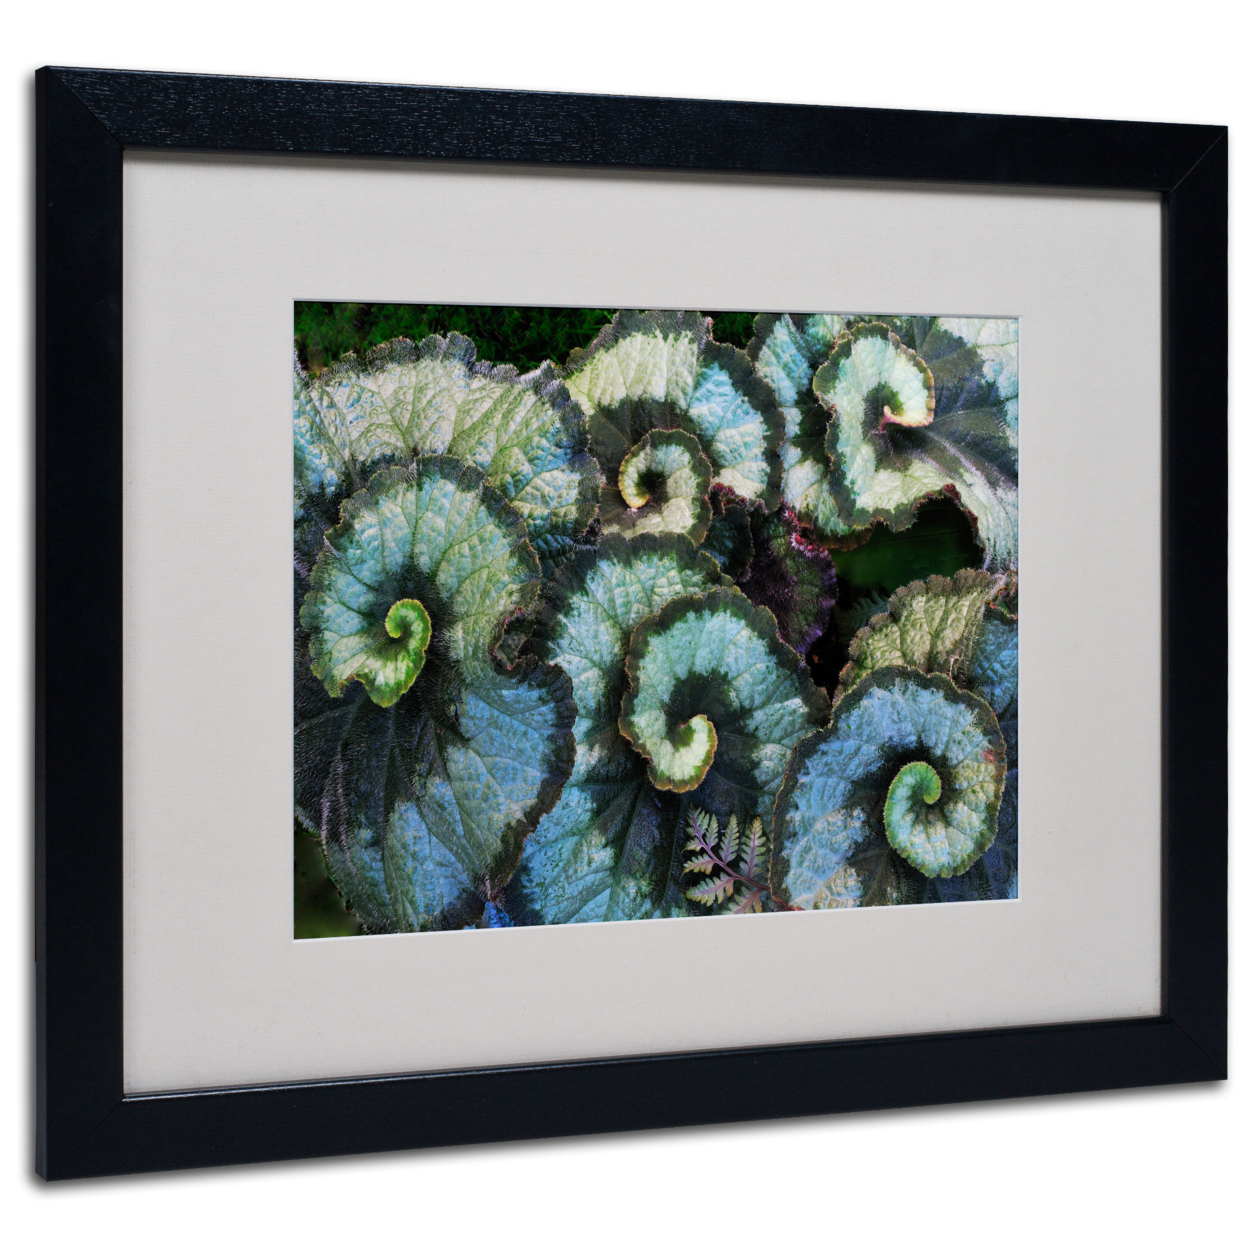 Kurt Shaffer 'Escargo Begonia Leaves' Black Wooden Framed Art 18 X 22 Inches